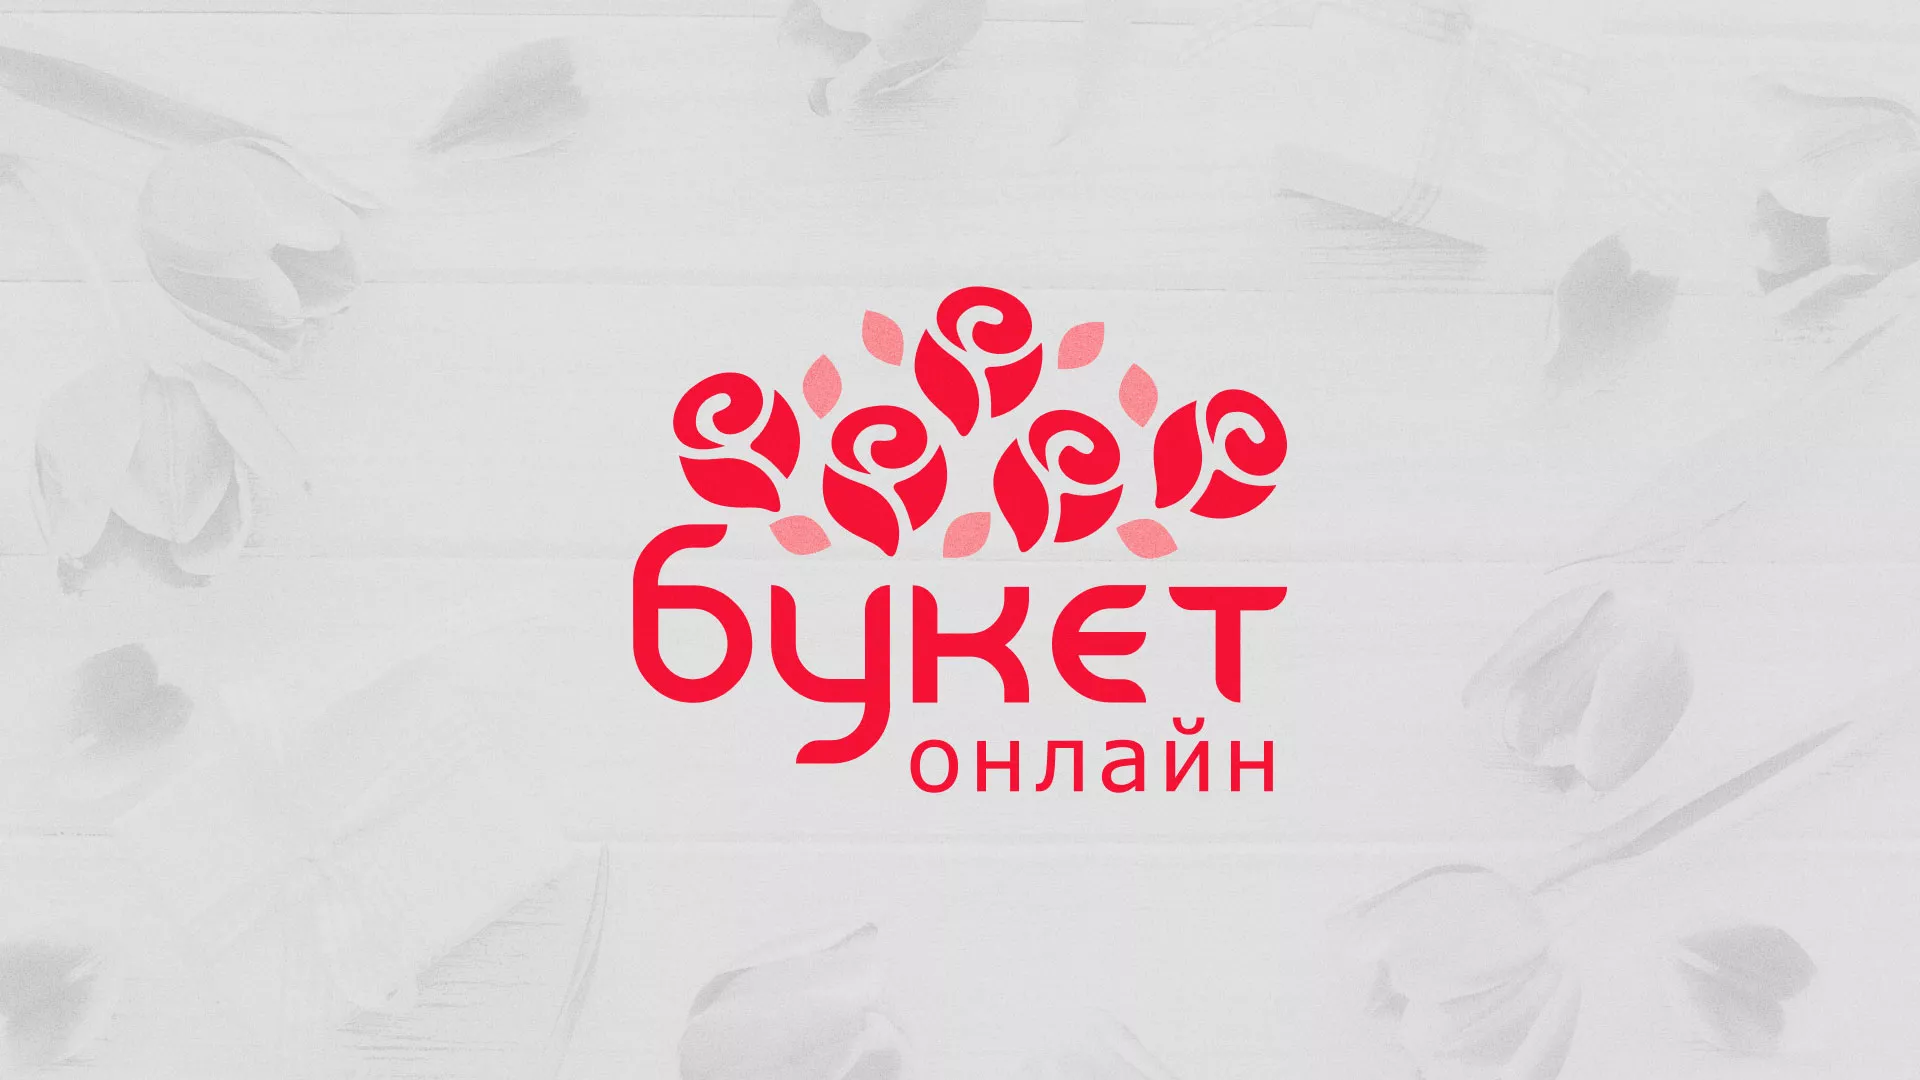 Создание интернет-магазина «Букет-онлайн» по цветам в Тосно